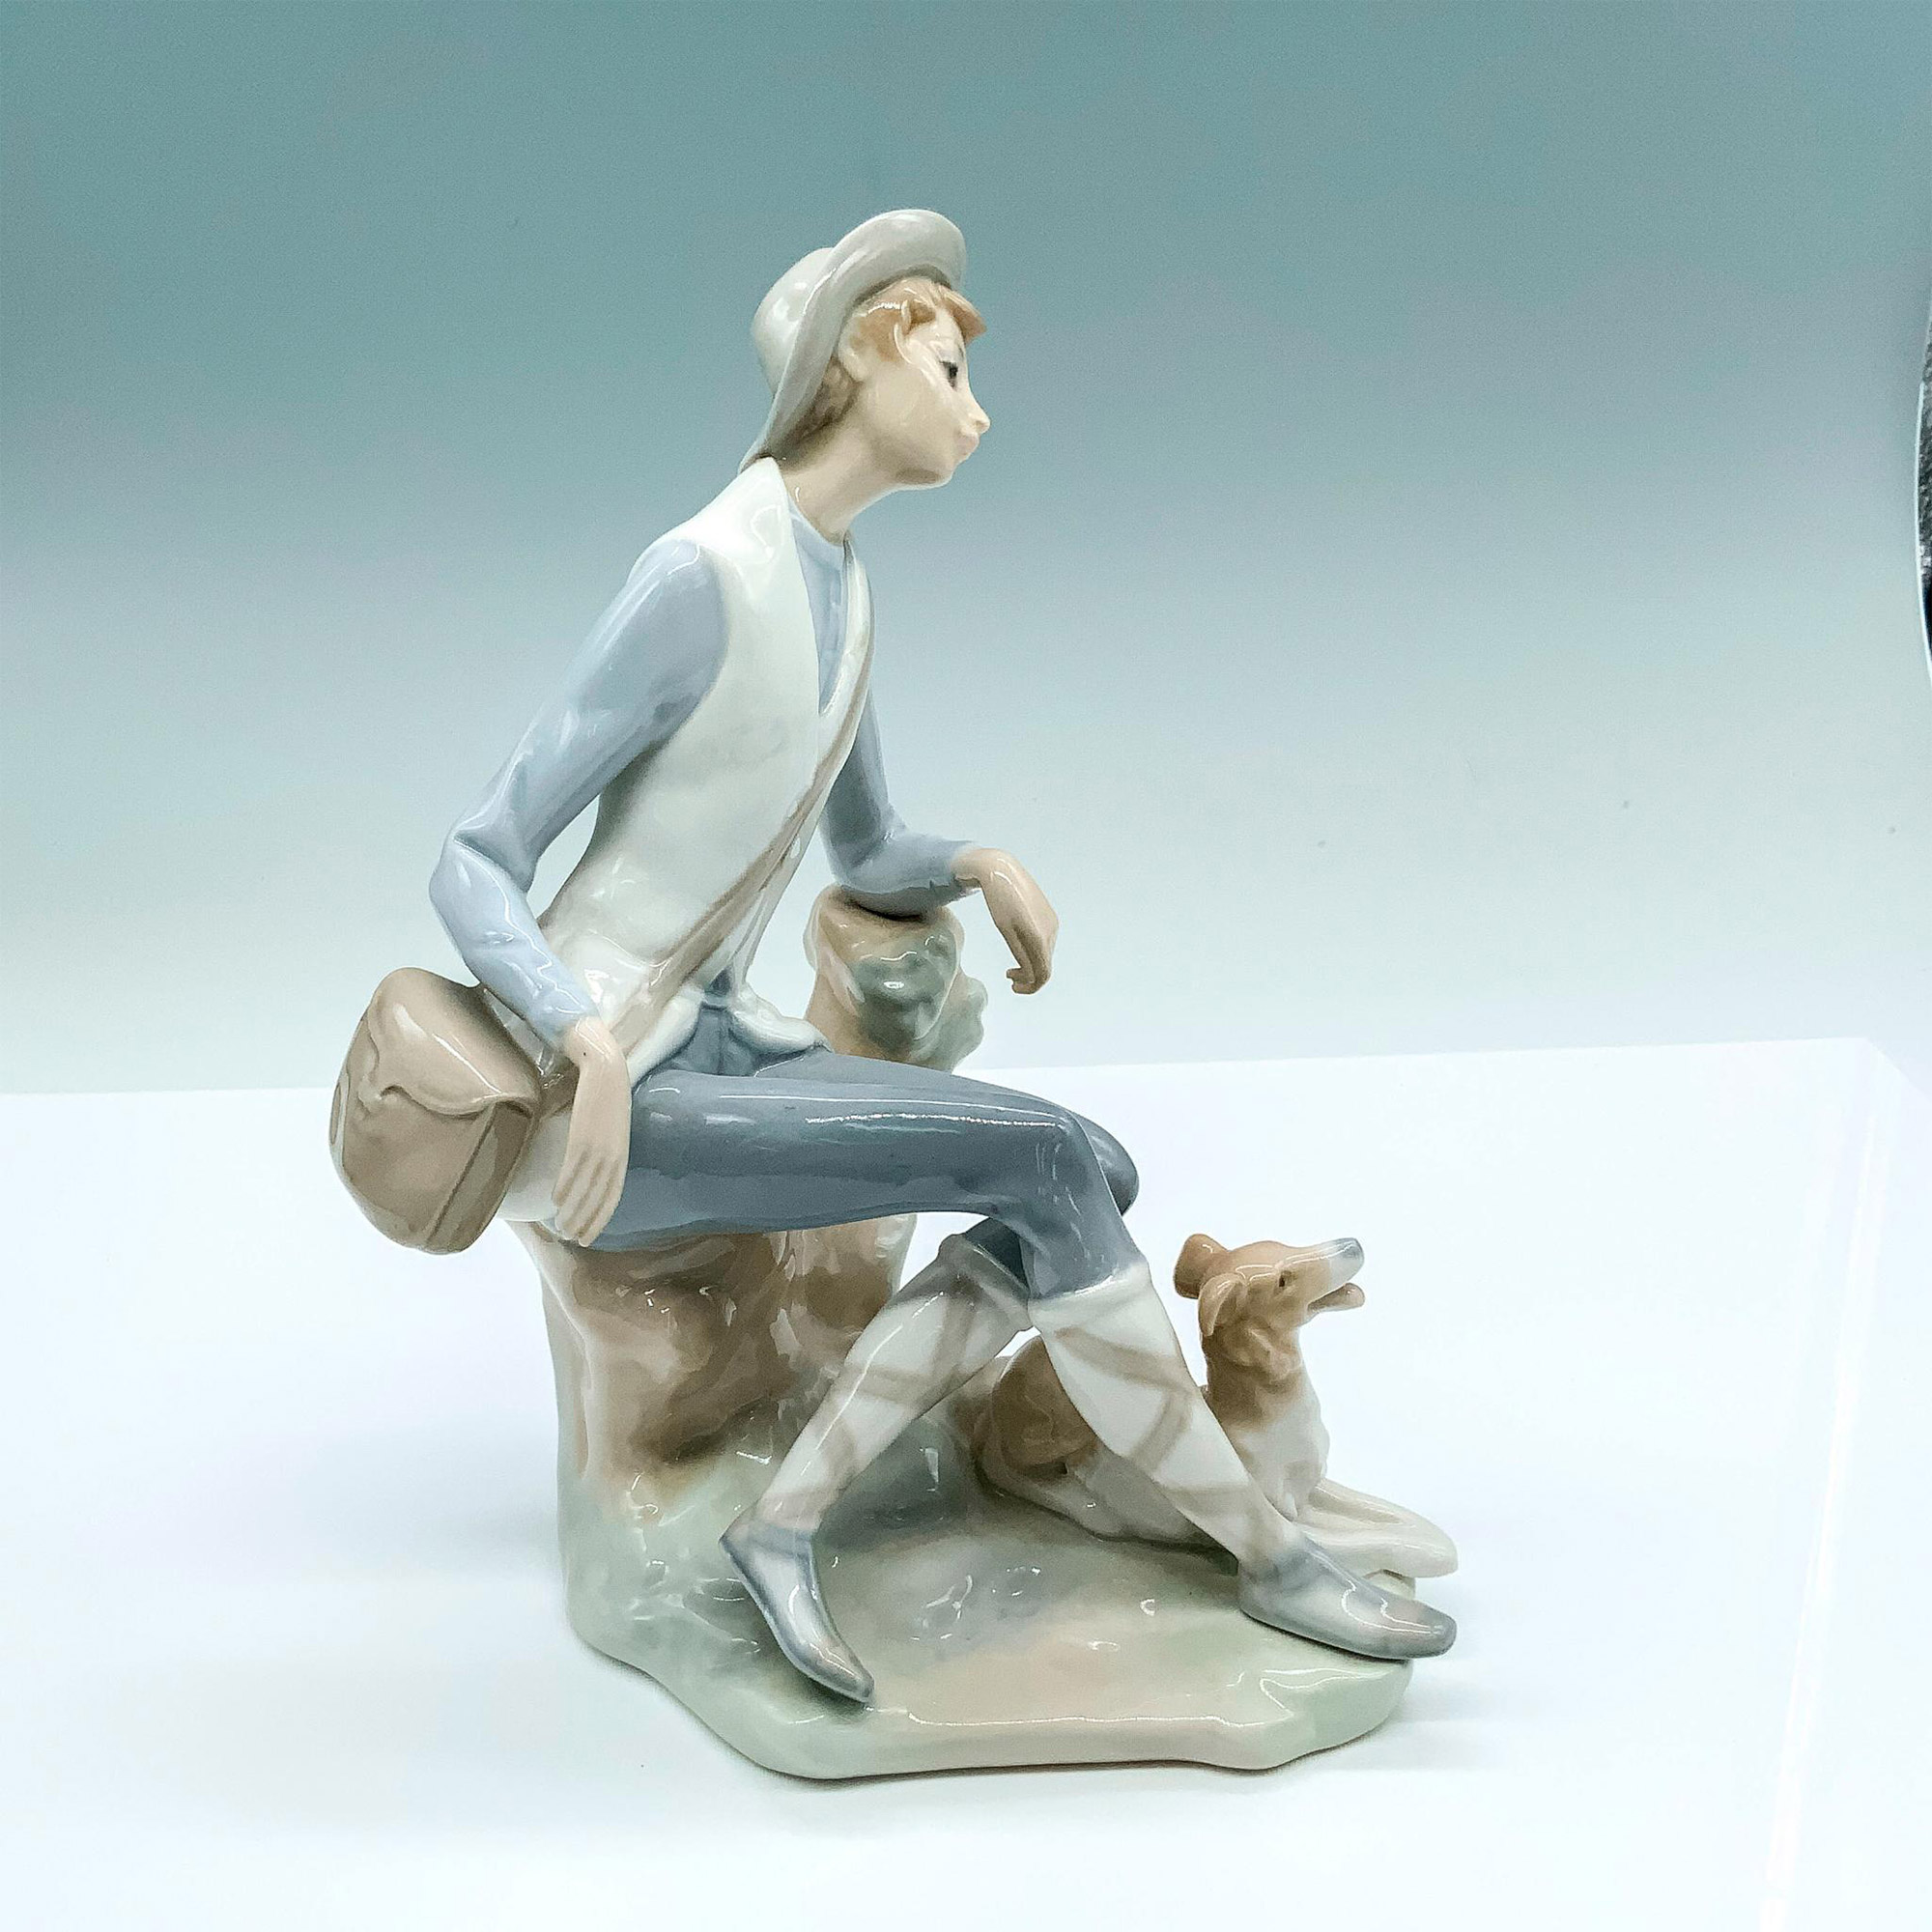 Shepherd 1004659 - Lladro Porcelain Figurine - Image 2 of 5